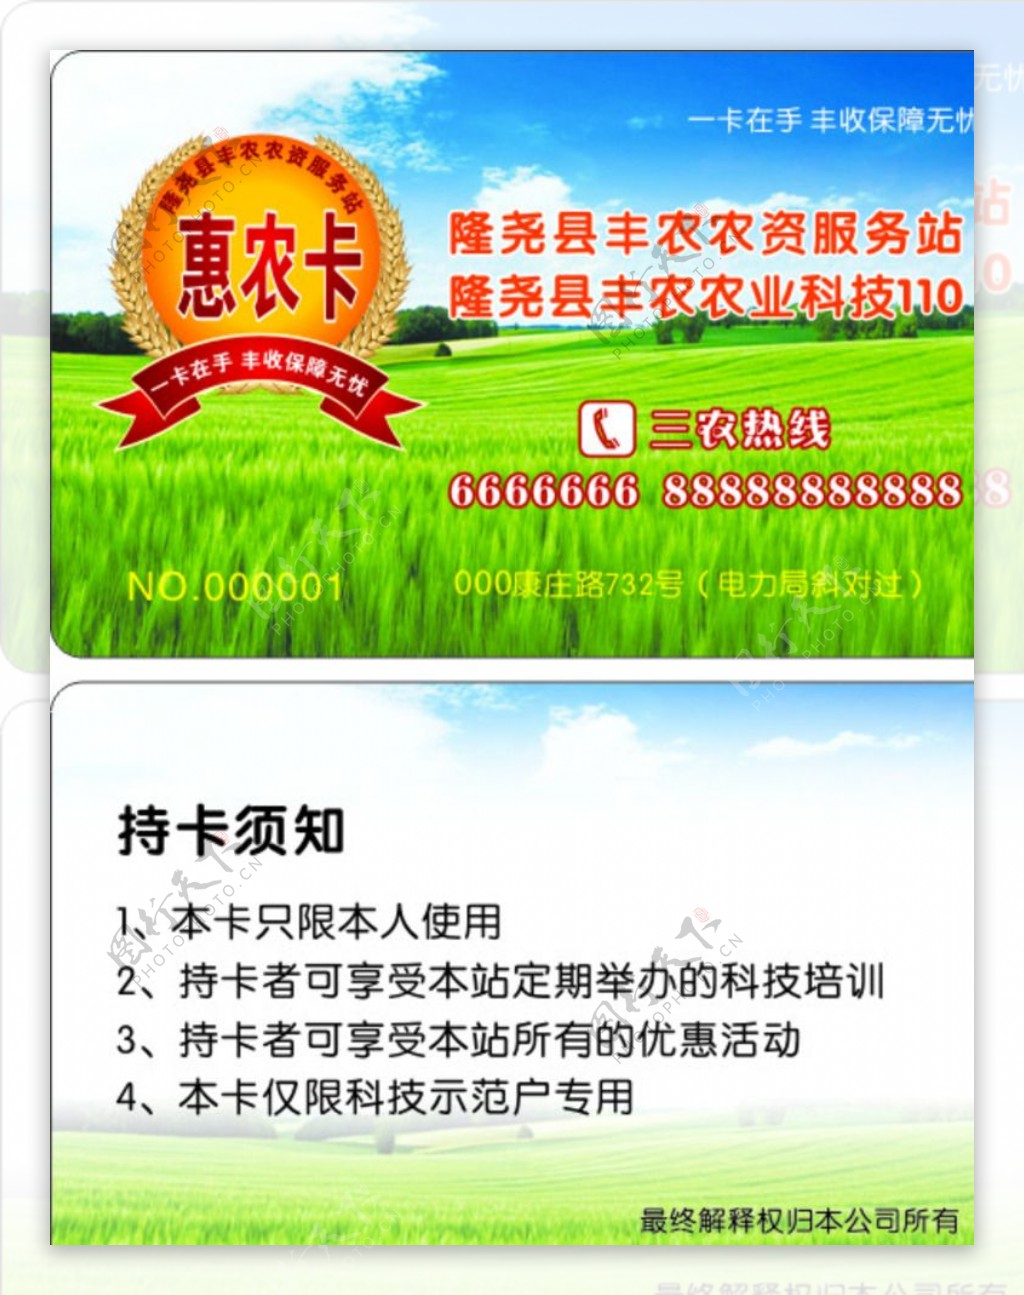 vip惠农卡农资服务图片